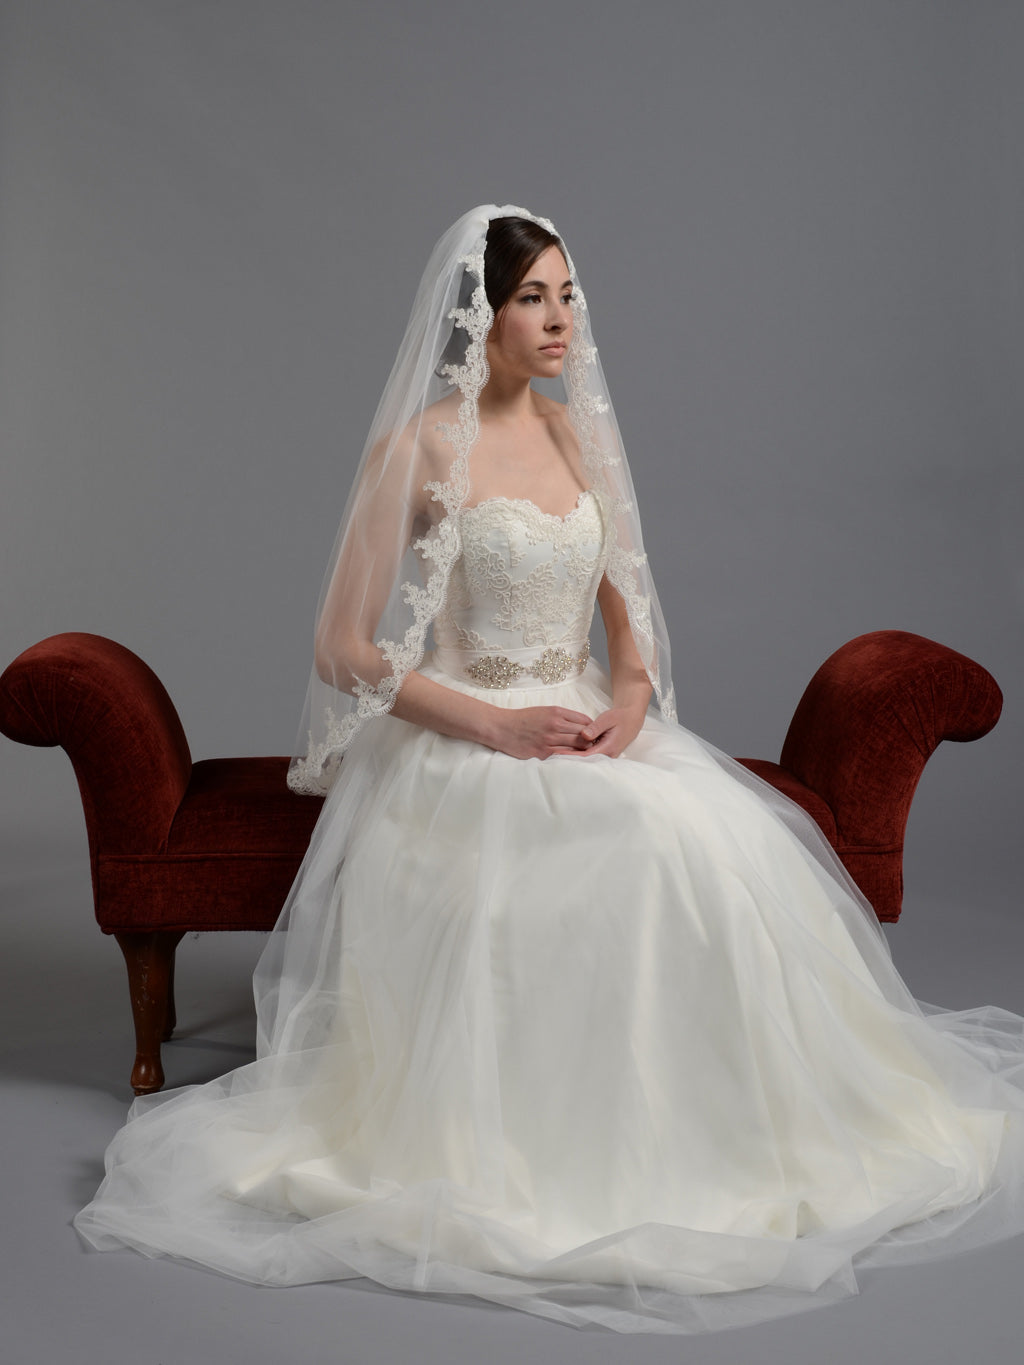 Lace Elbow Wedding Veil 30'', Elbow Length Veil With Trim, Light Ivory Veil,  Short Veil Lace Bridal Veil Waist Length Veil Alencon Lace Veil 